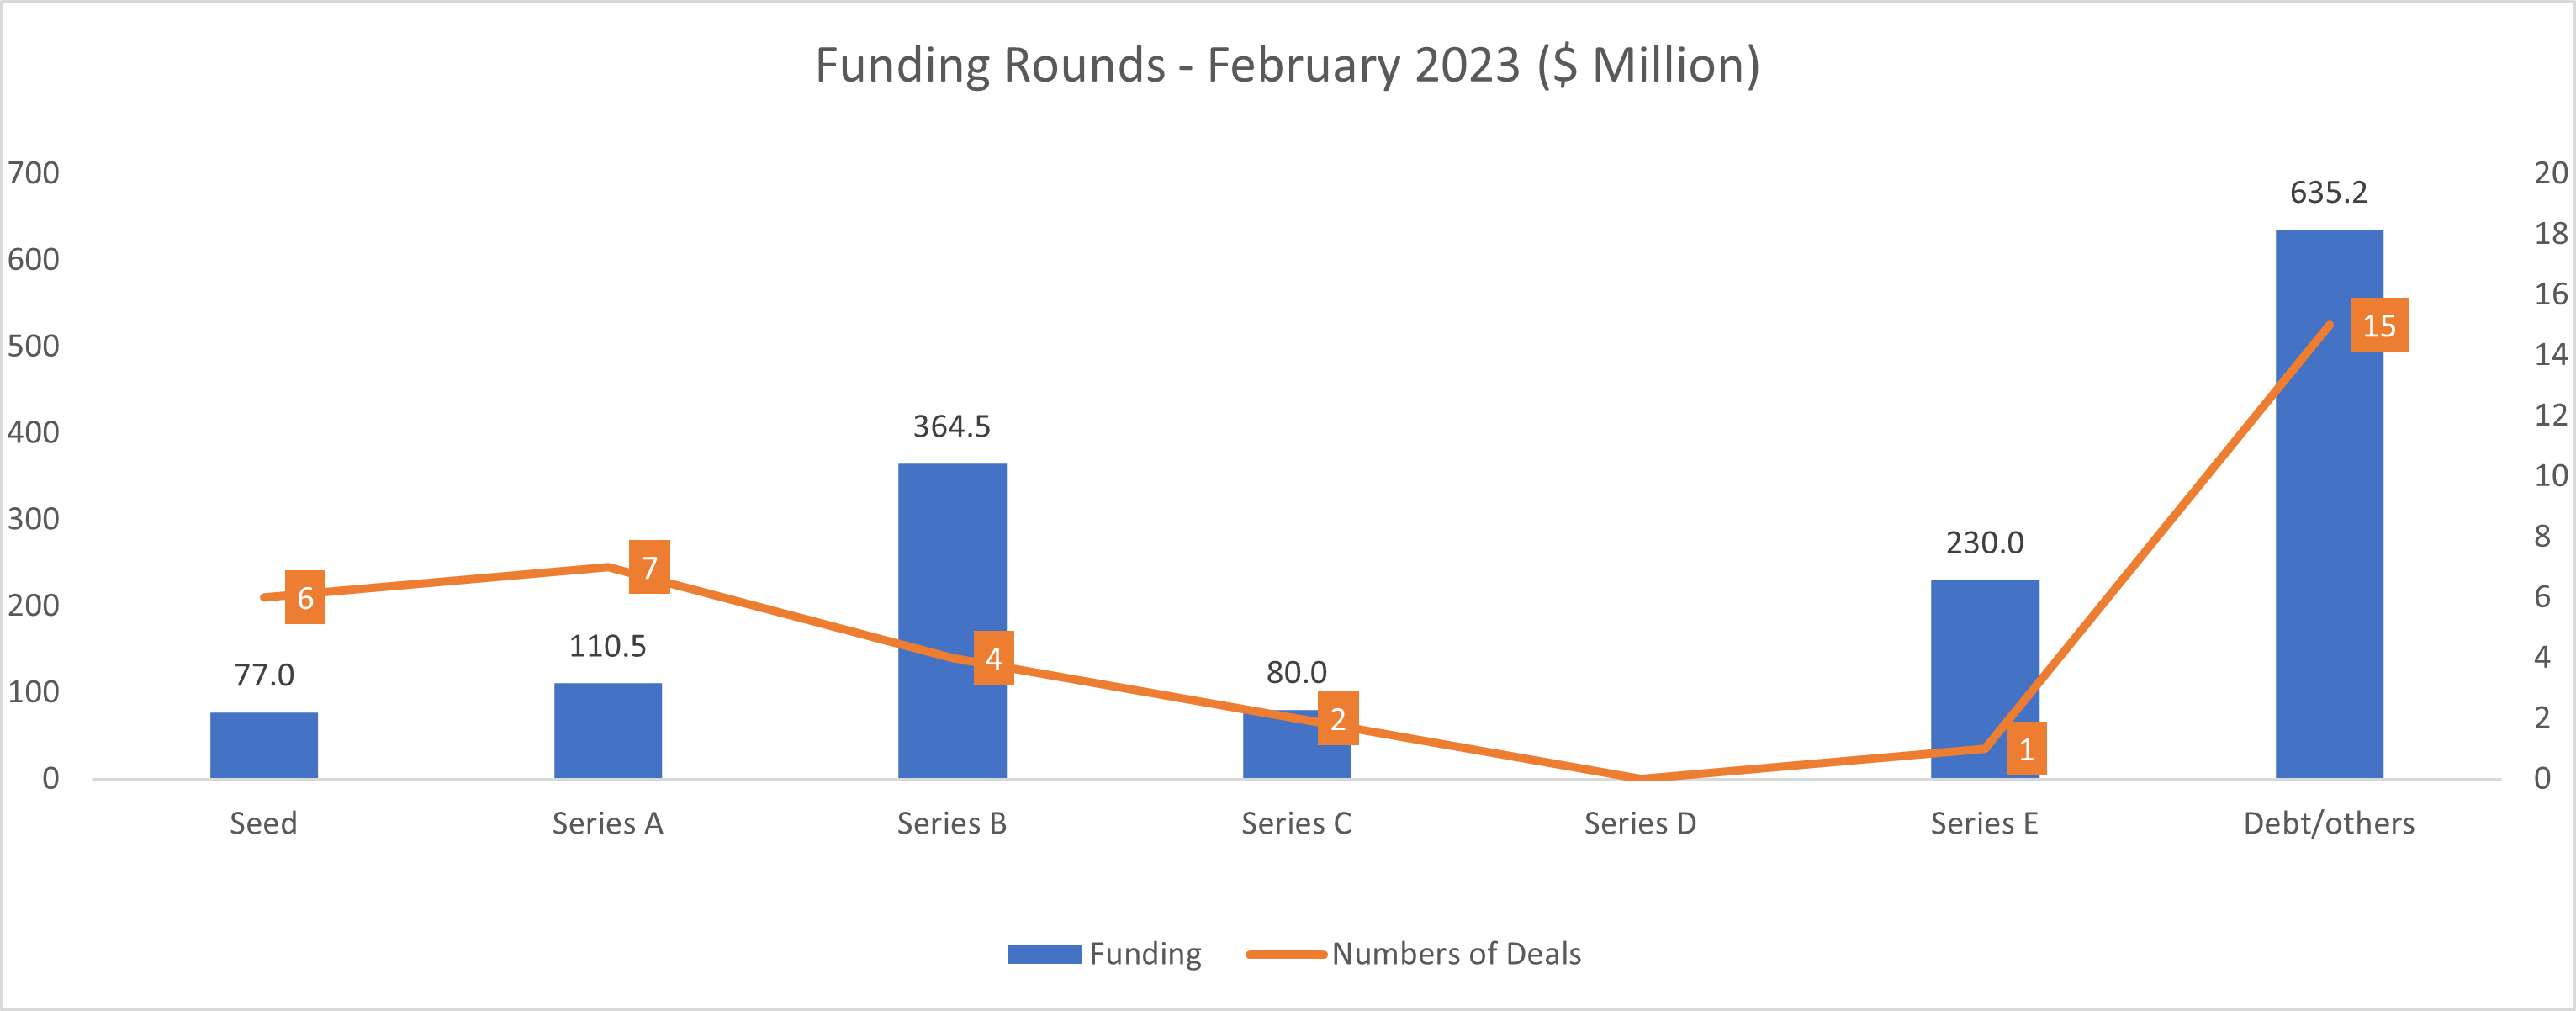 Funding Rounds - February 2023